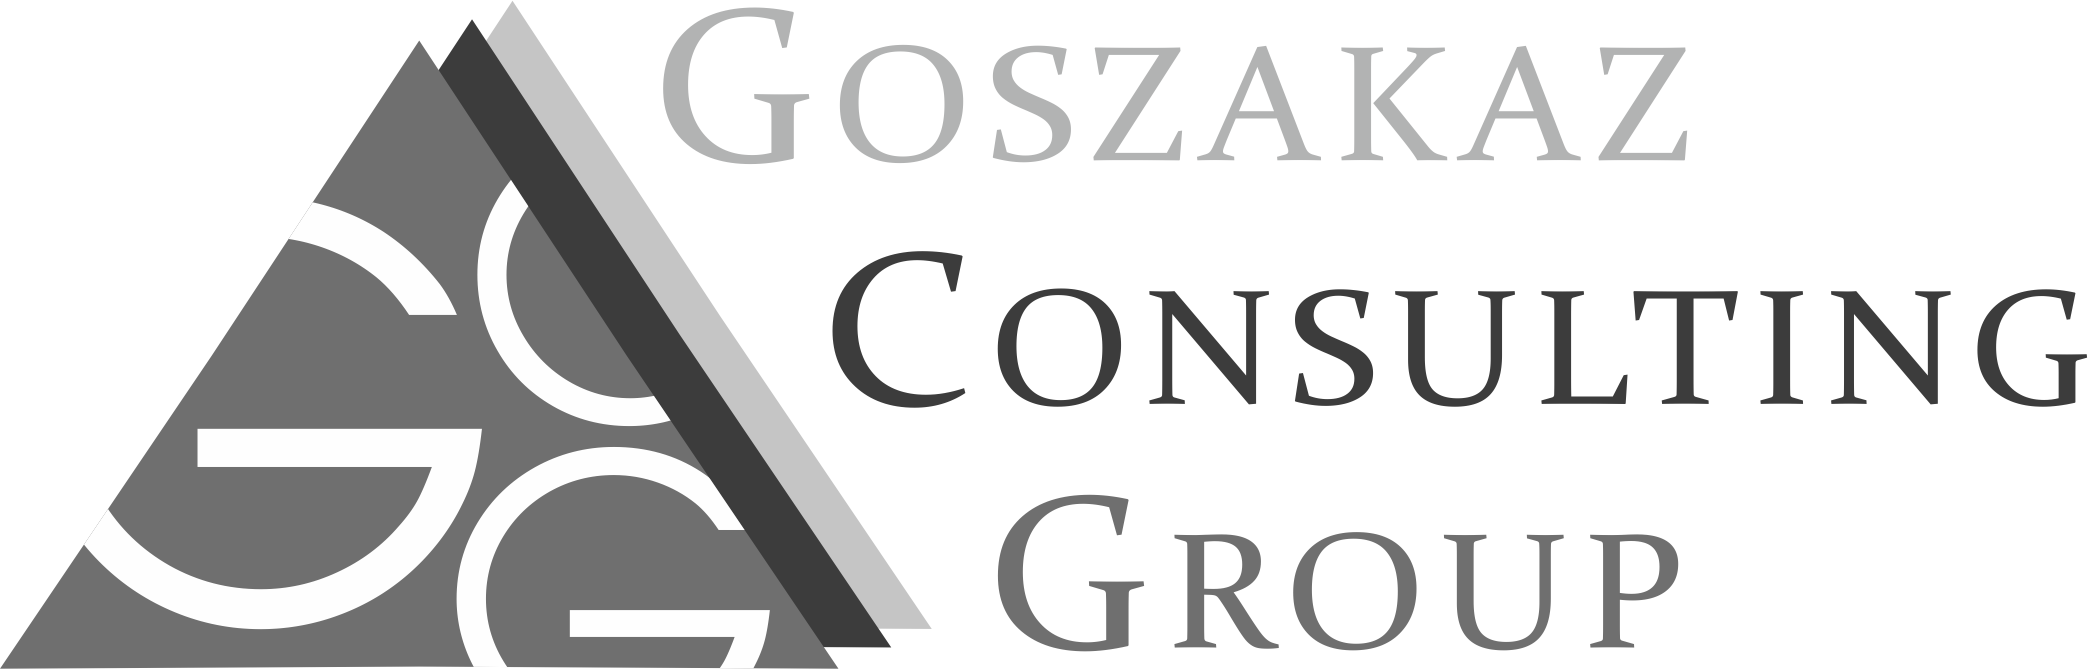 GoszakazConsalting_Logo